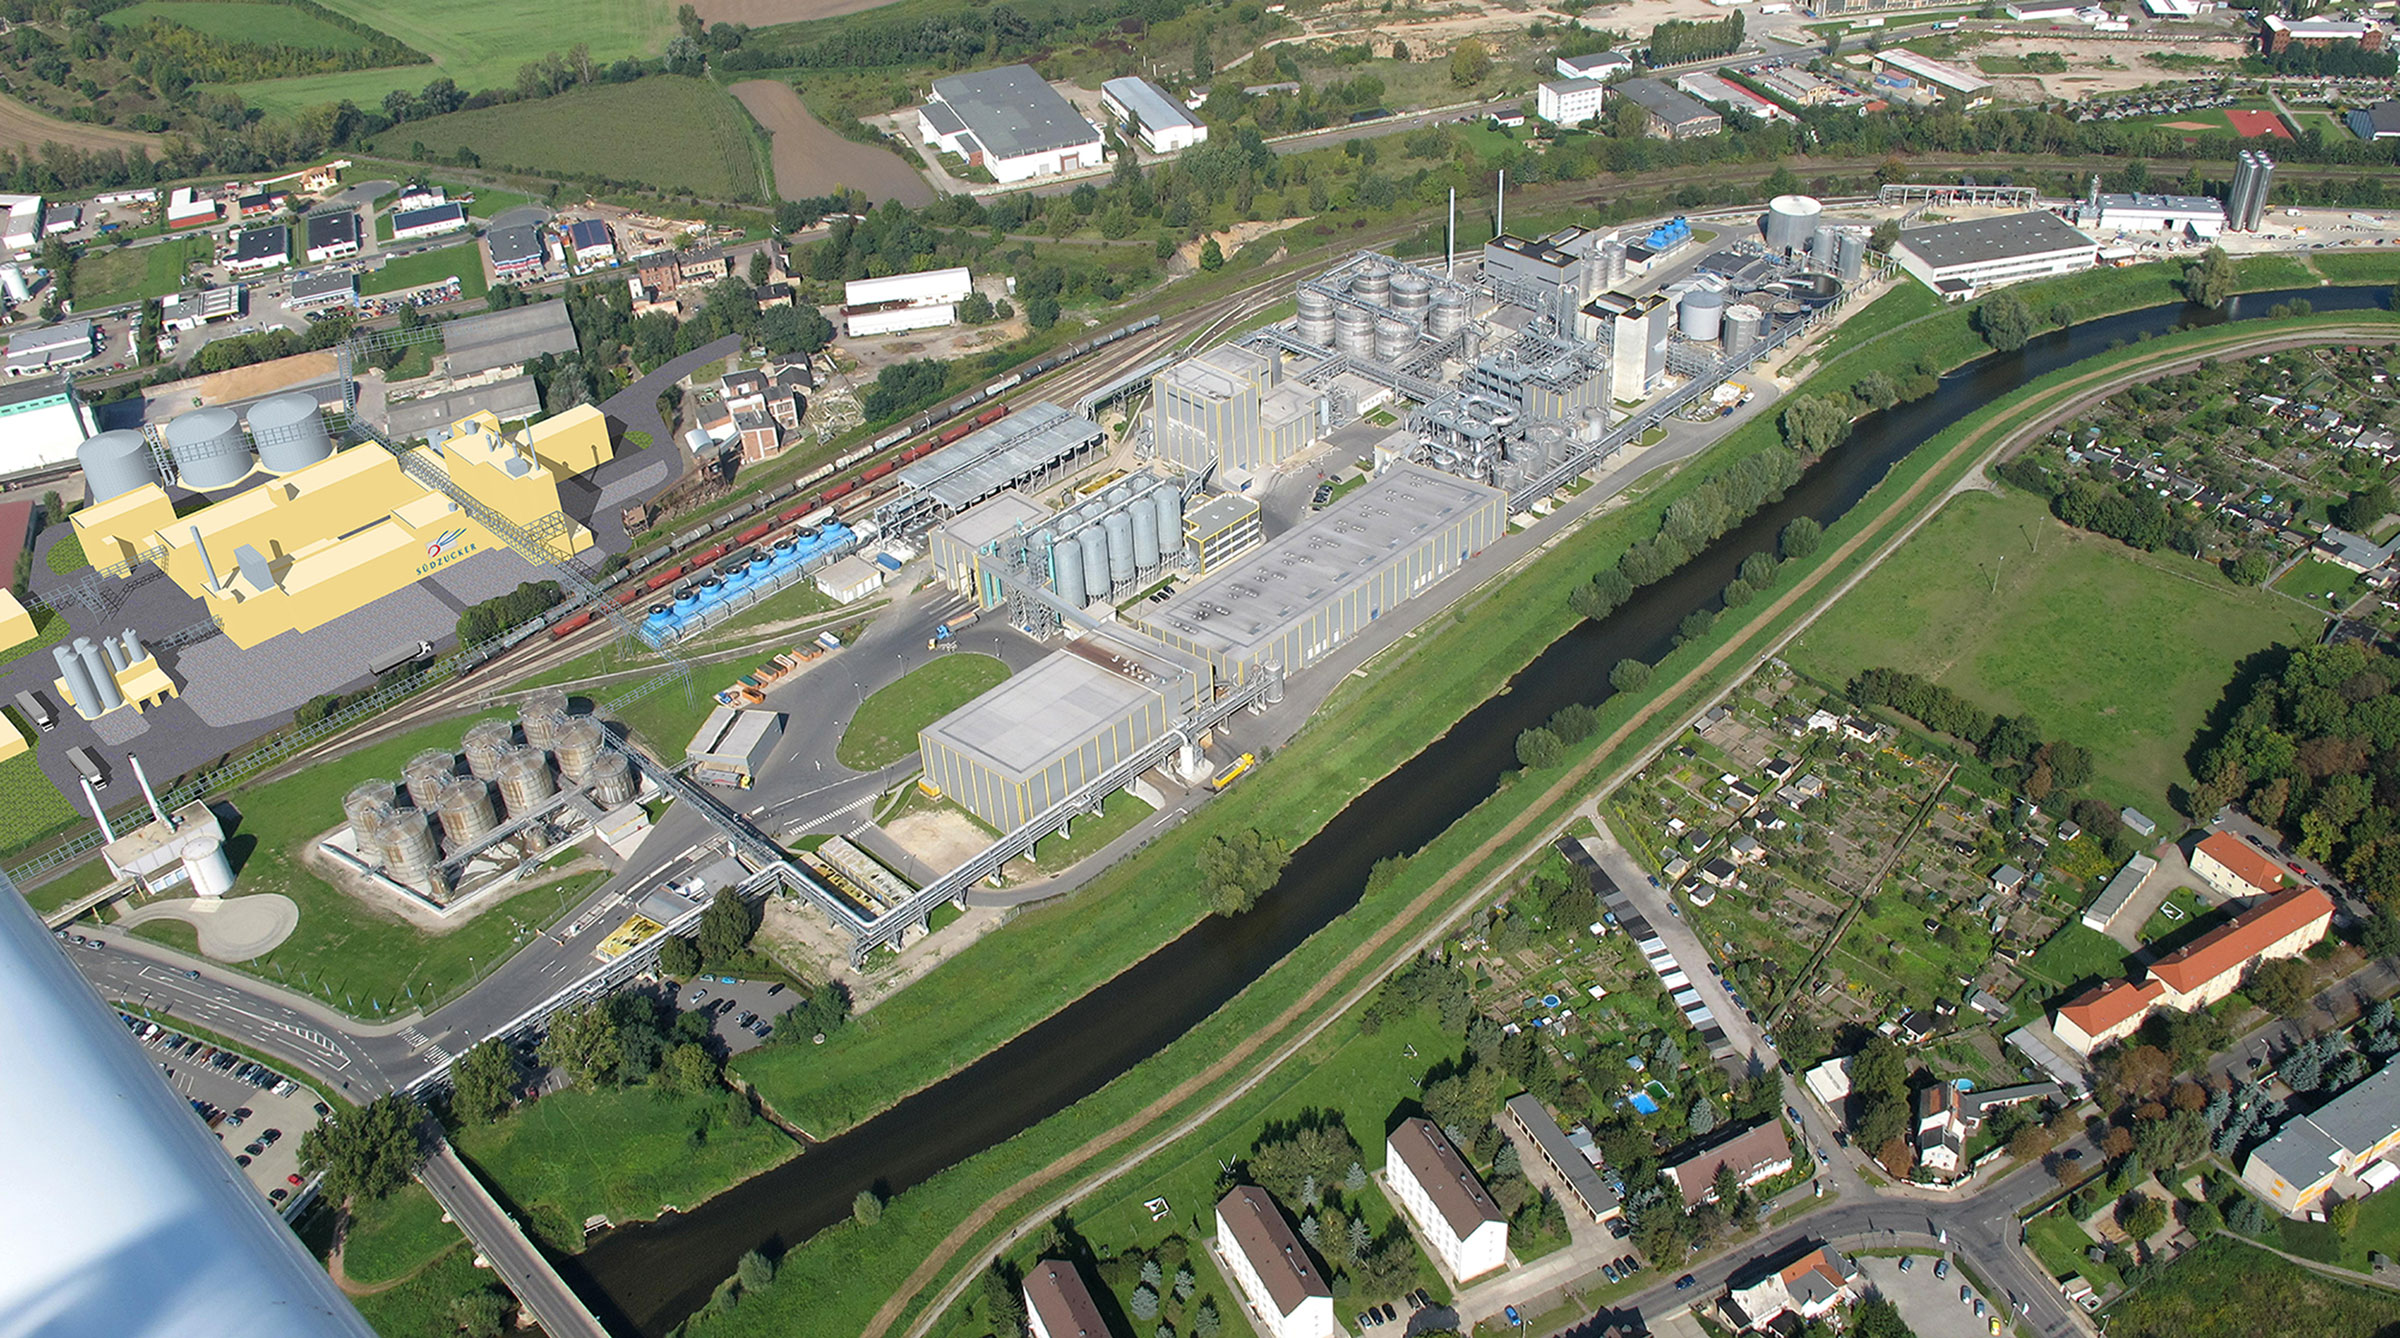 Südzucker plant in Zeitz for wheat starch processing (engineered by TBP)